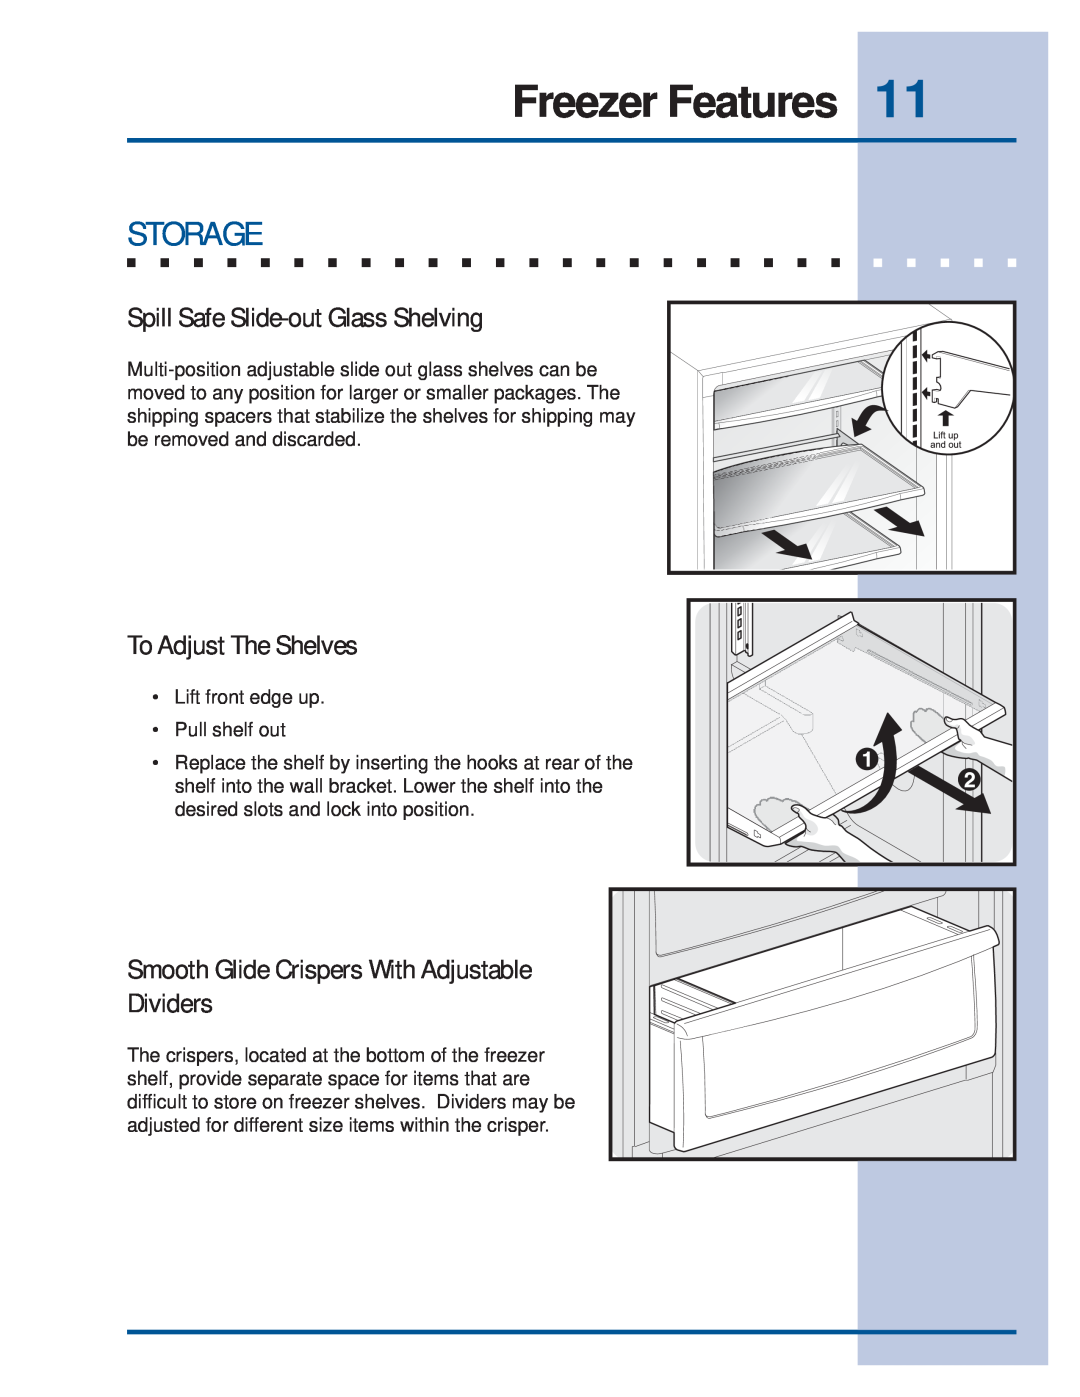 Electrolux Refrigerator manual Freezer Features, Spill Safe Slide-out Glass Shelving, To Adjust The Shelves, Storage 